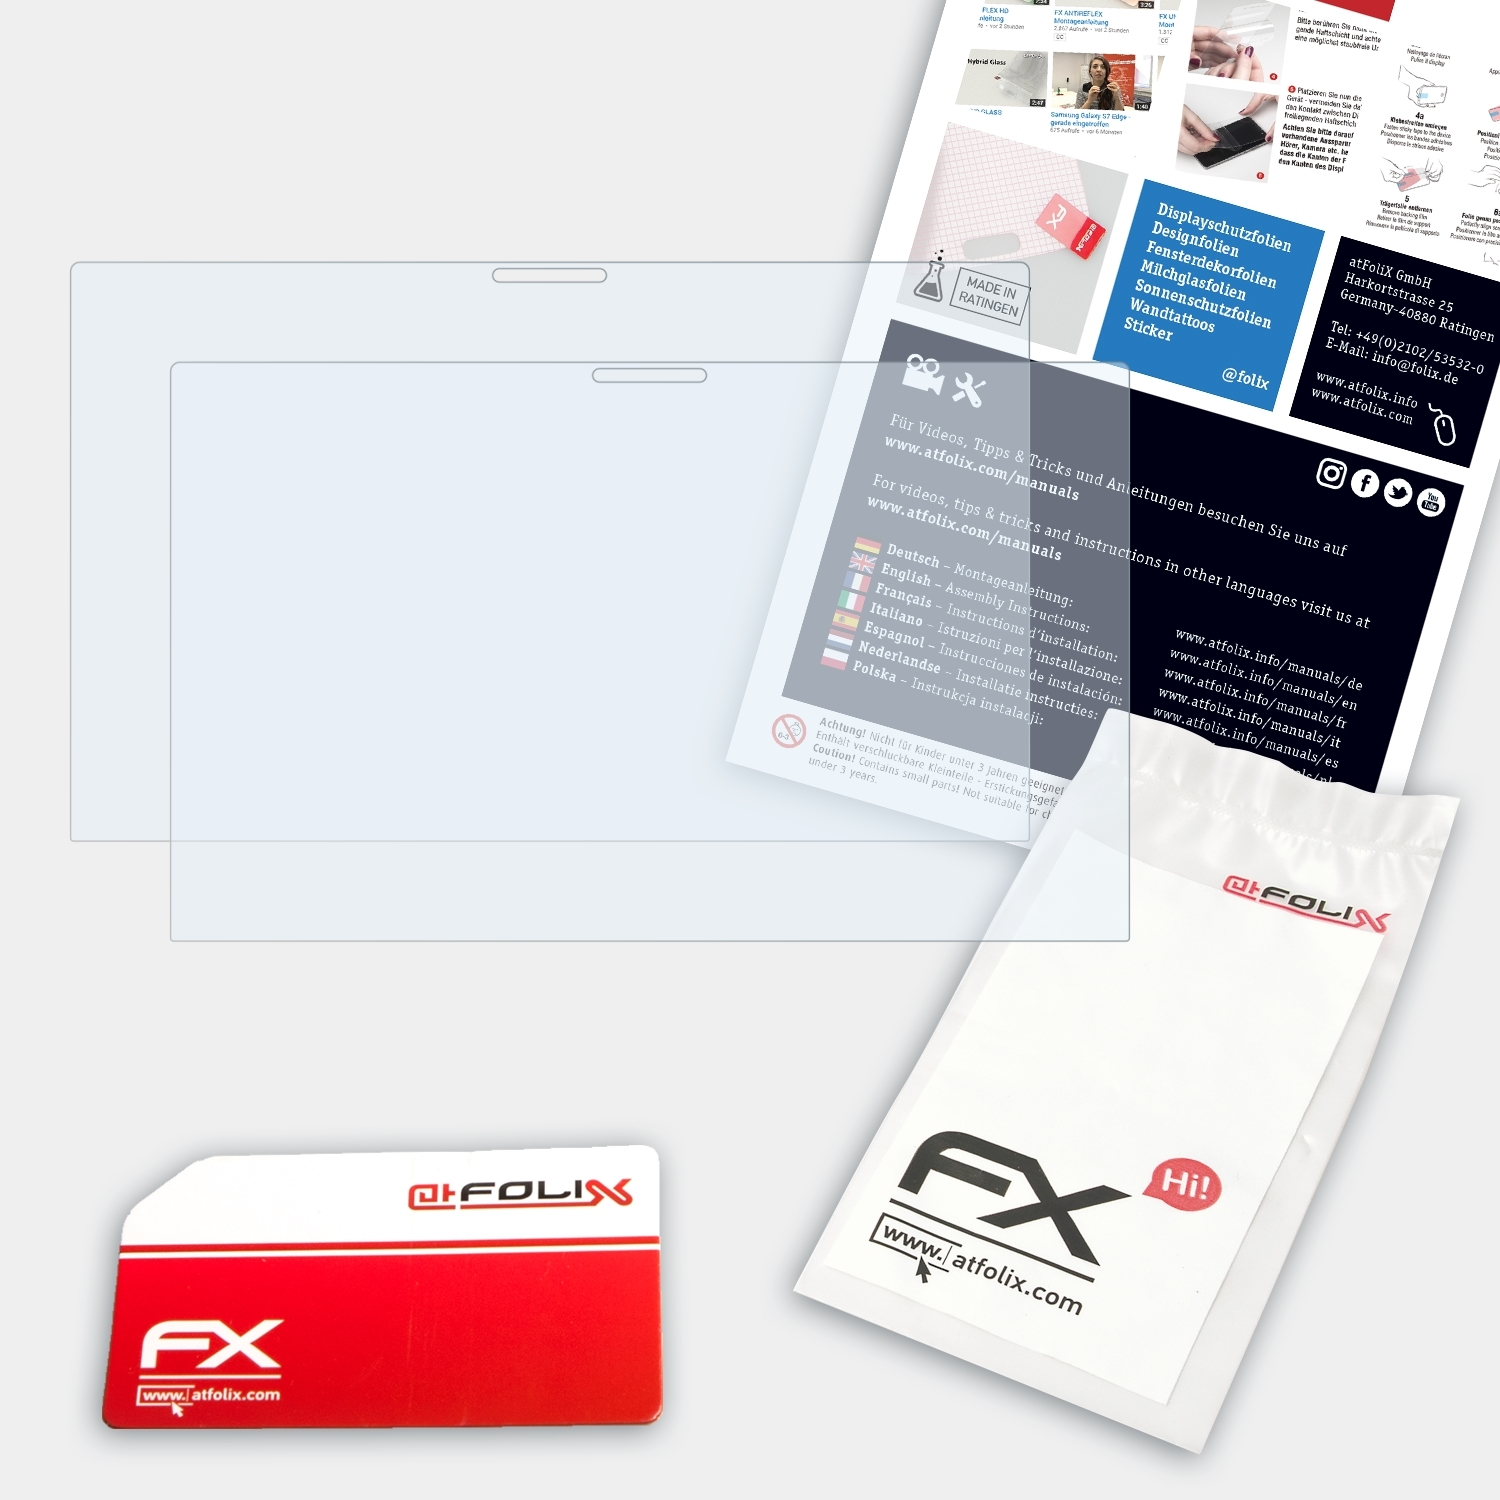 ATFOLIX 2x Flip FX-Clear 13 Asus (UX362FA)) ZenBook Displayschutz(für